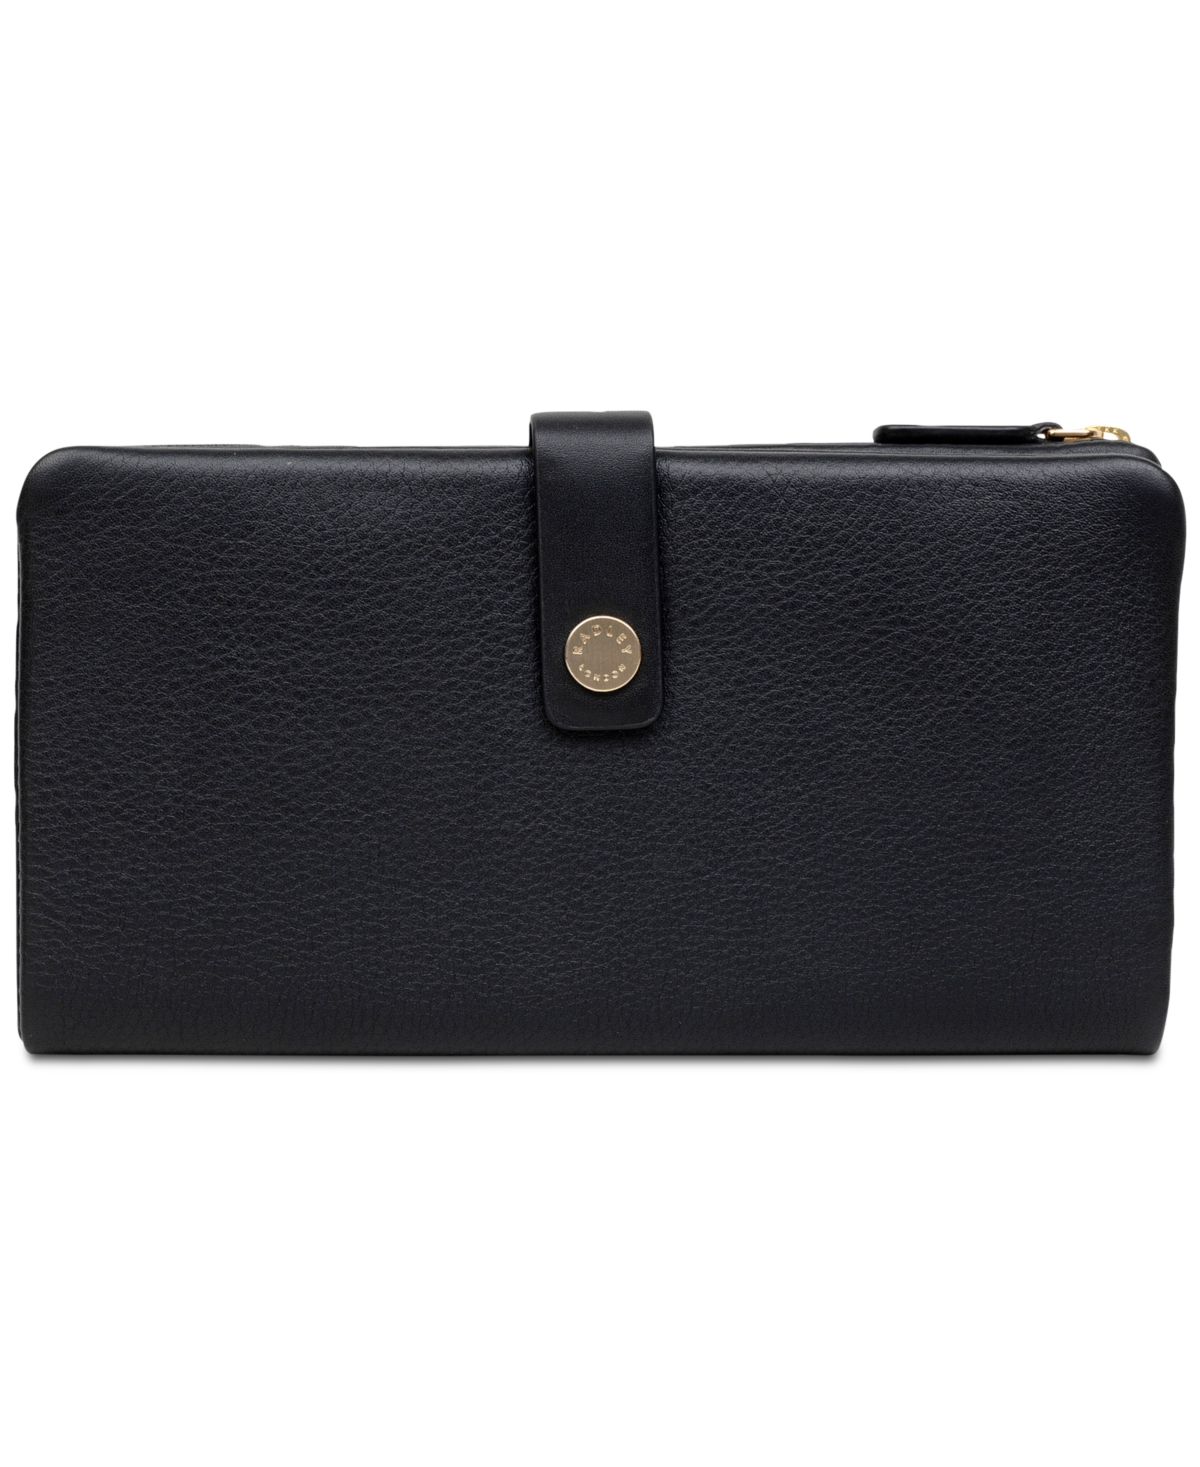 Women's Larkswood Large Leather Bifold Wallet - Black/Gold